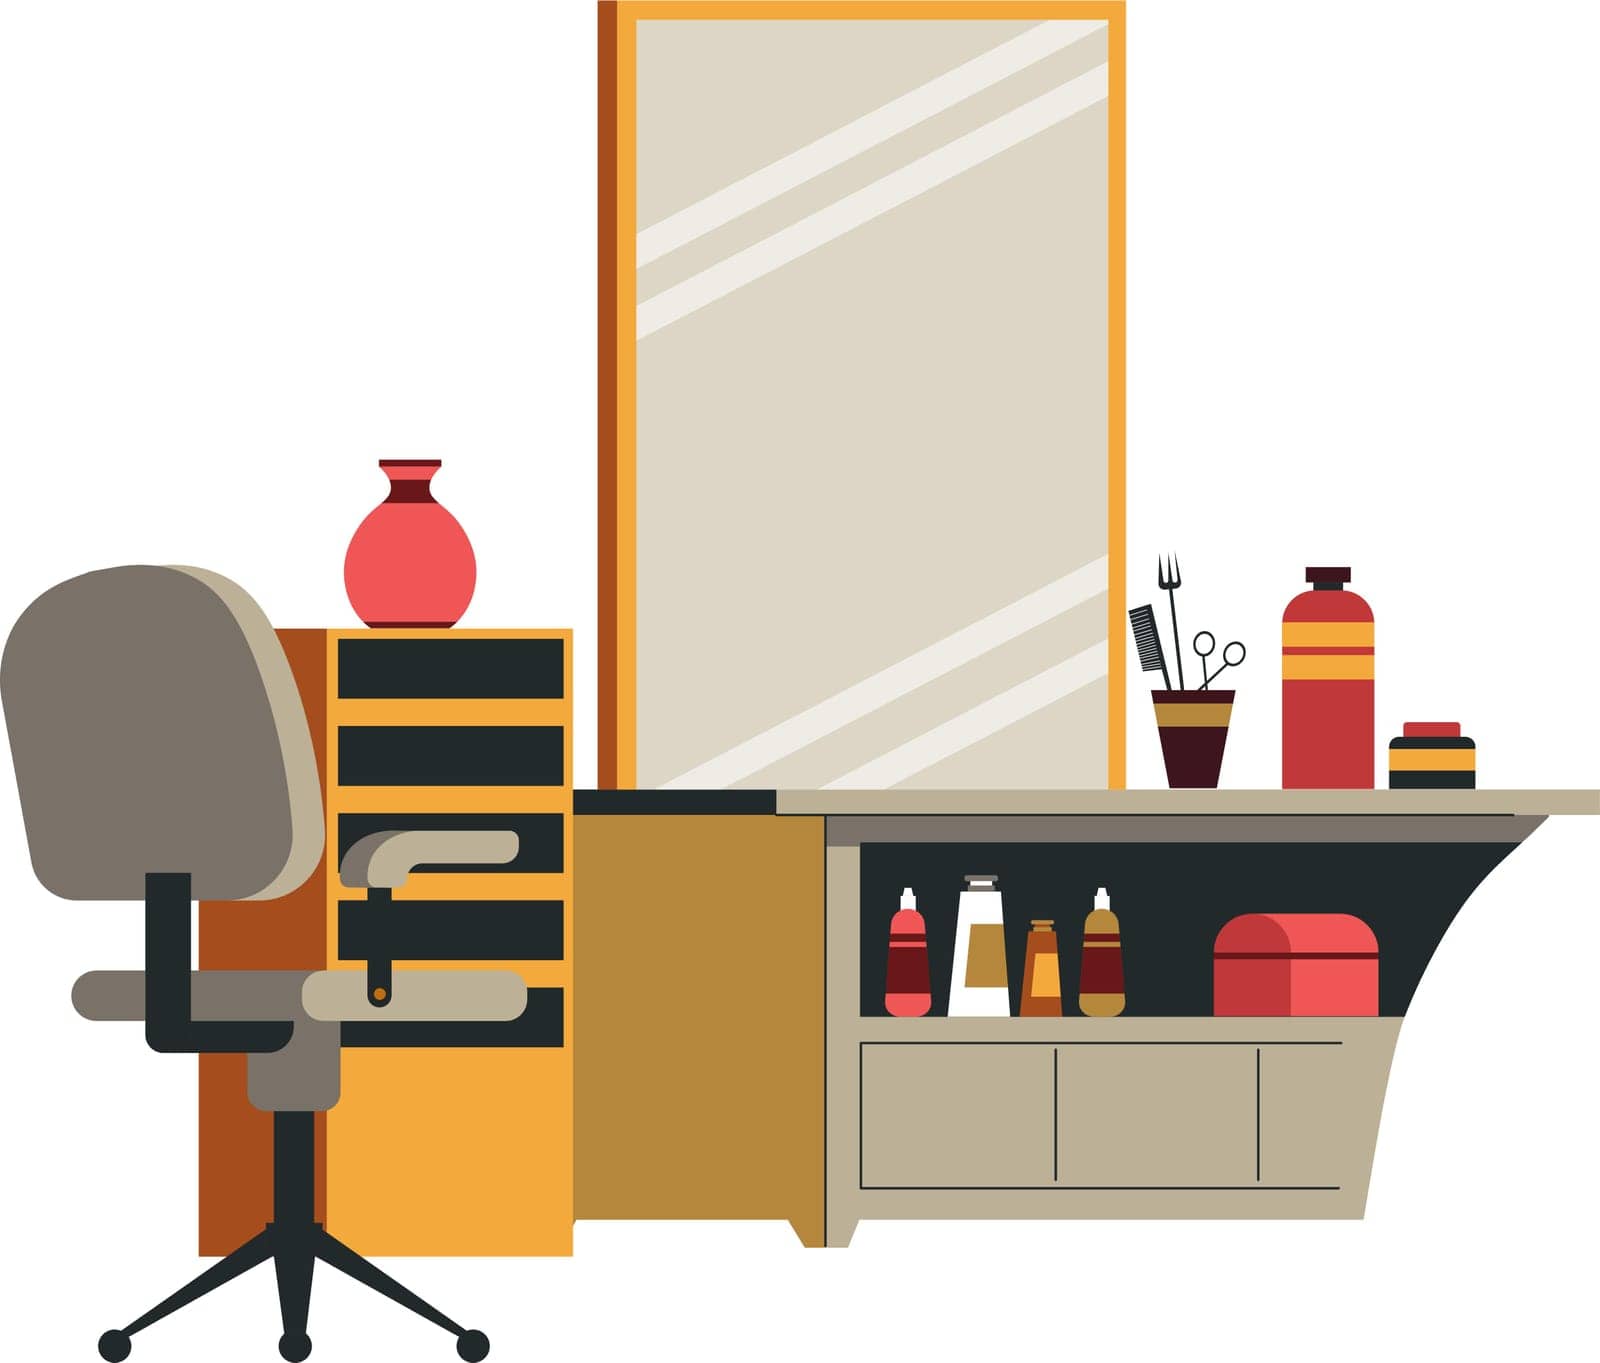 Barbershop interior design, workplace with mirror by Sonulkaster